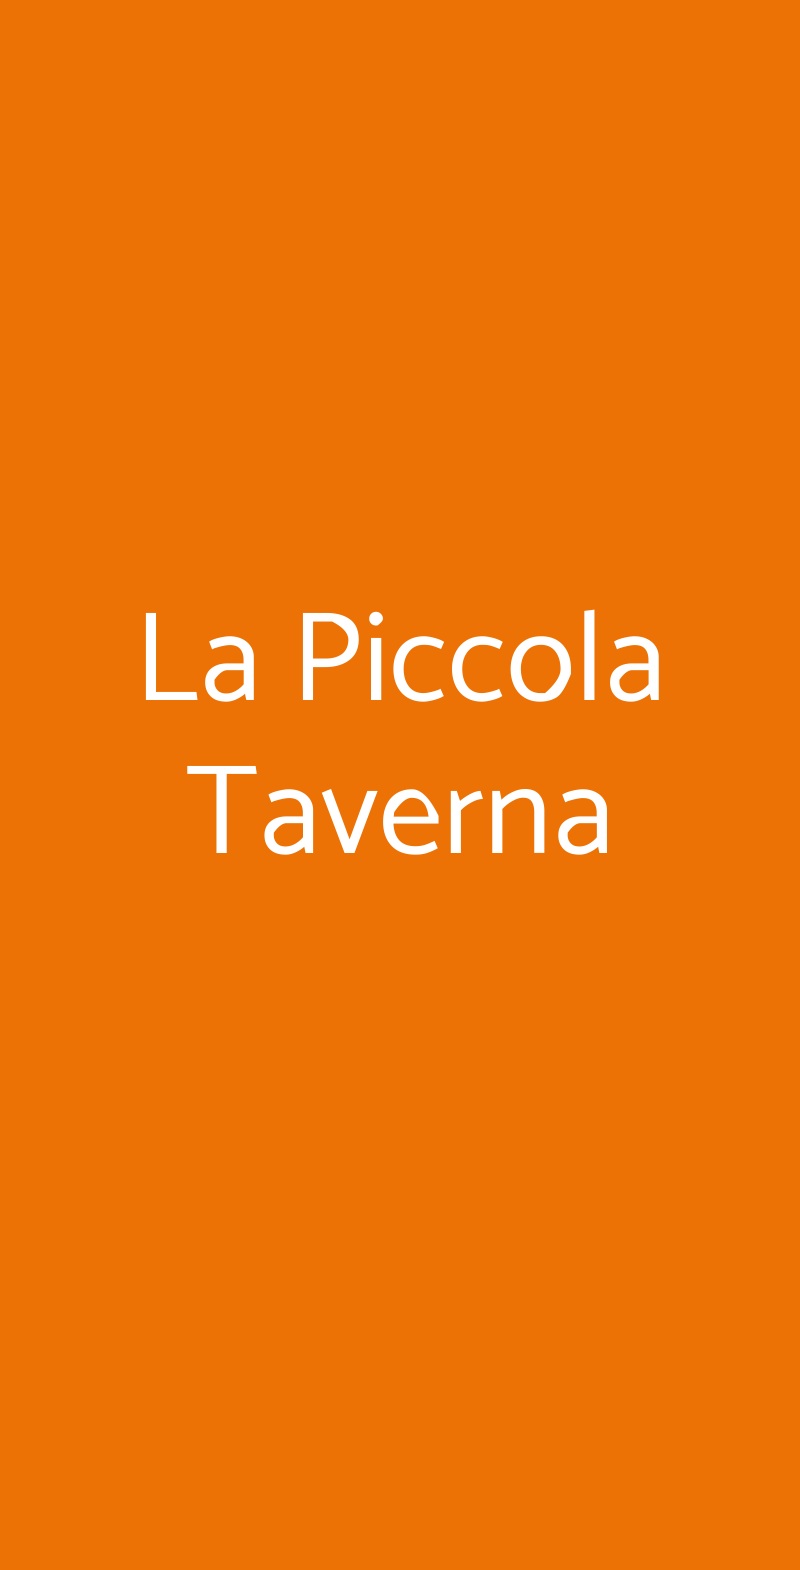 La Piccola Taverna Villa San Giovanni menù 1 pagina